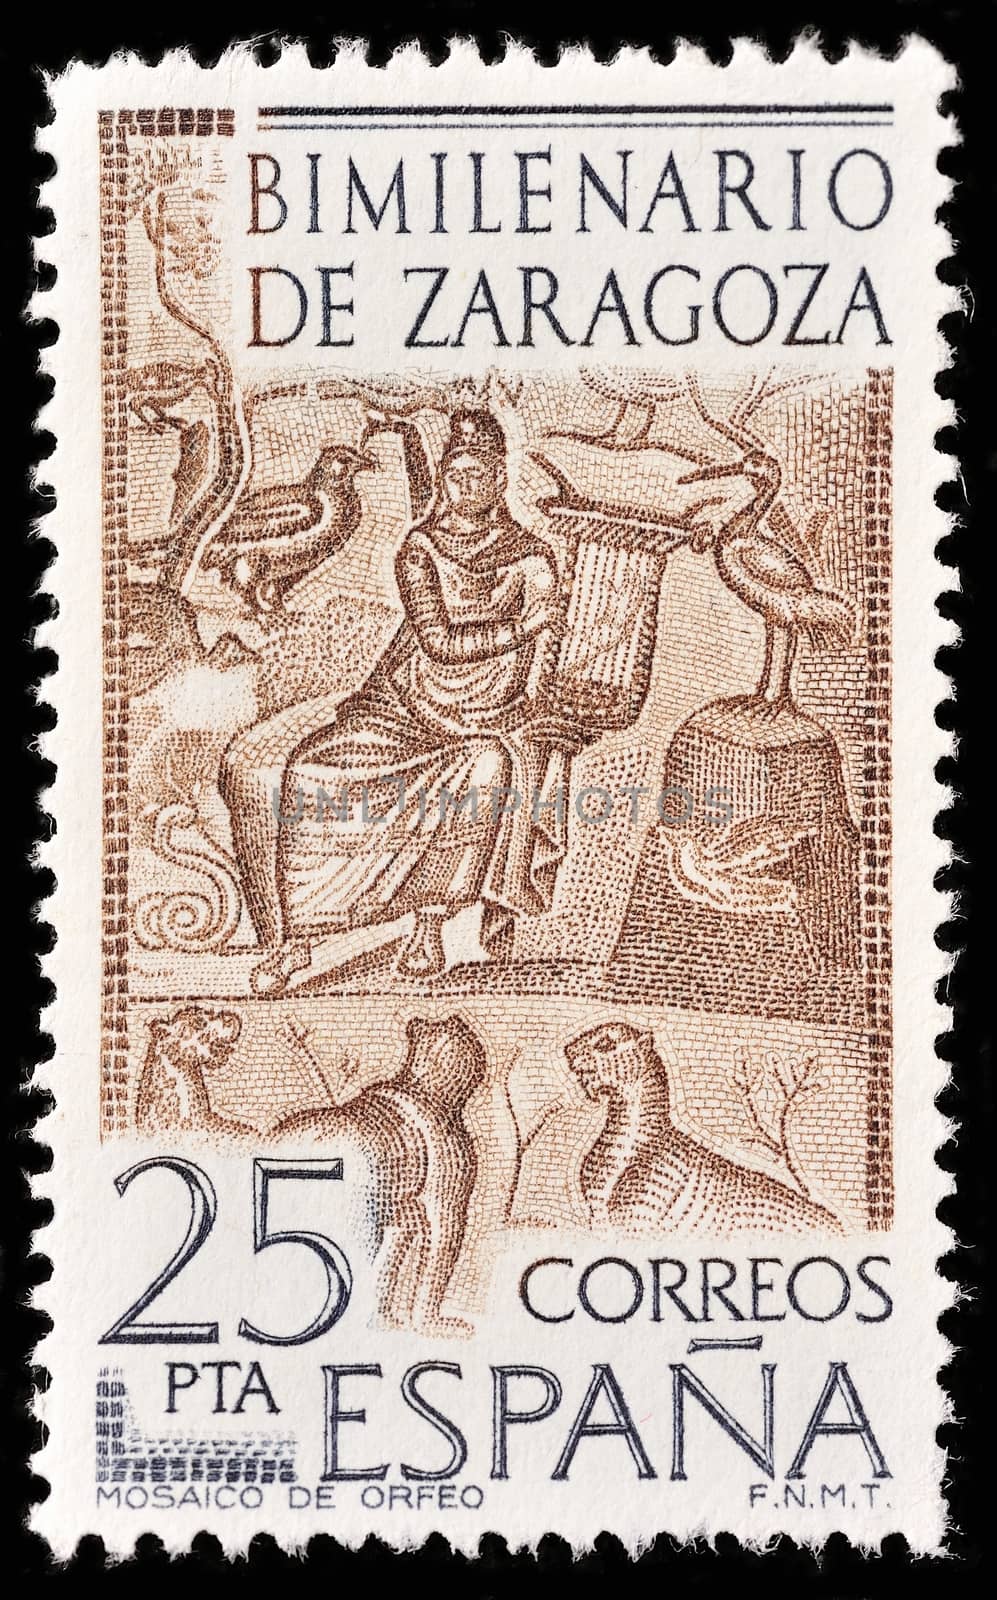 SPAIN - CIRCA 1976: A stamp printed in Spain shows image celebrating the bimillenium of Zaragoza, circa 1976